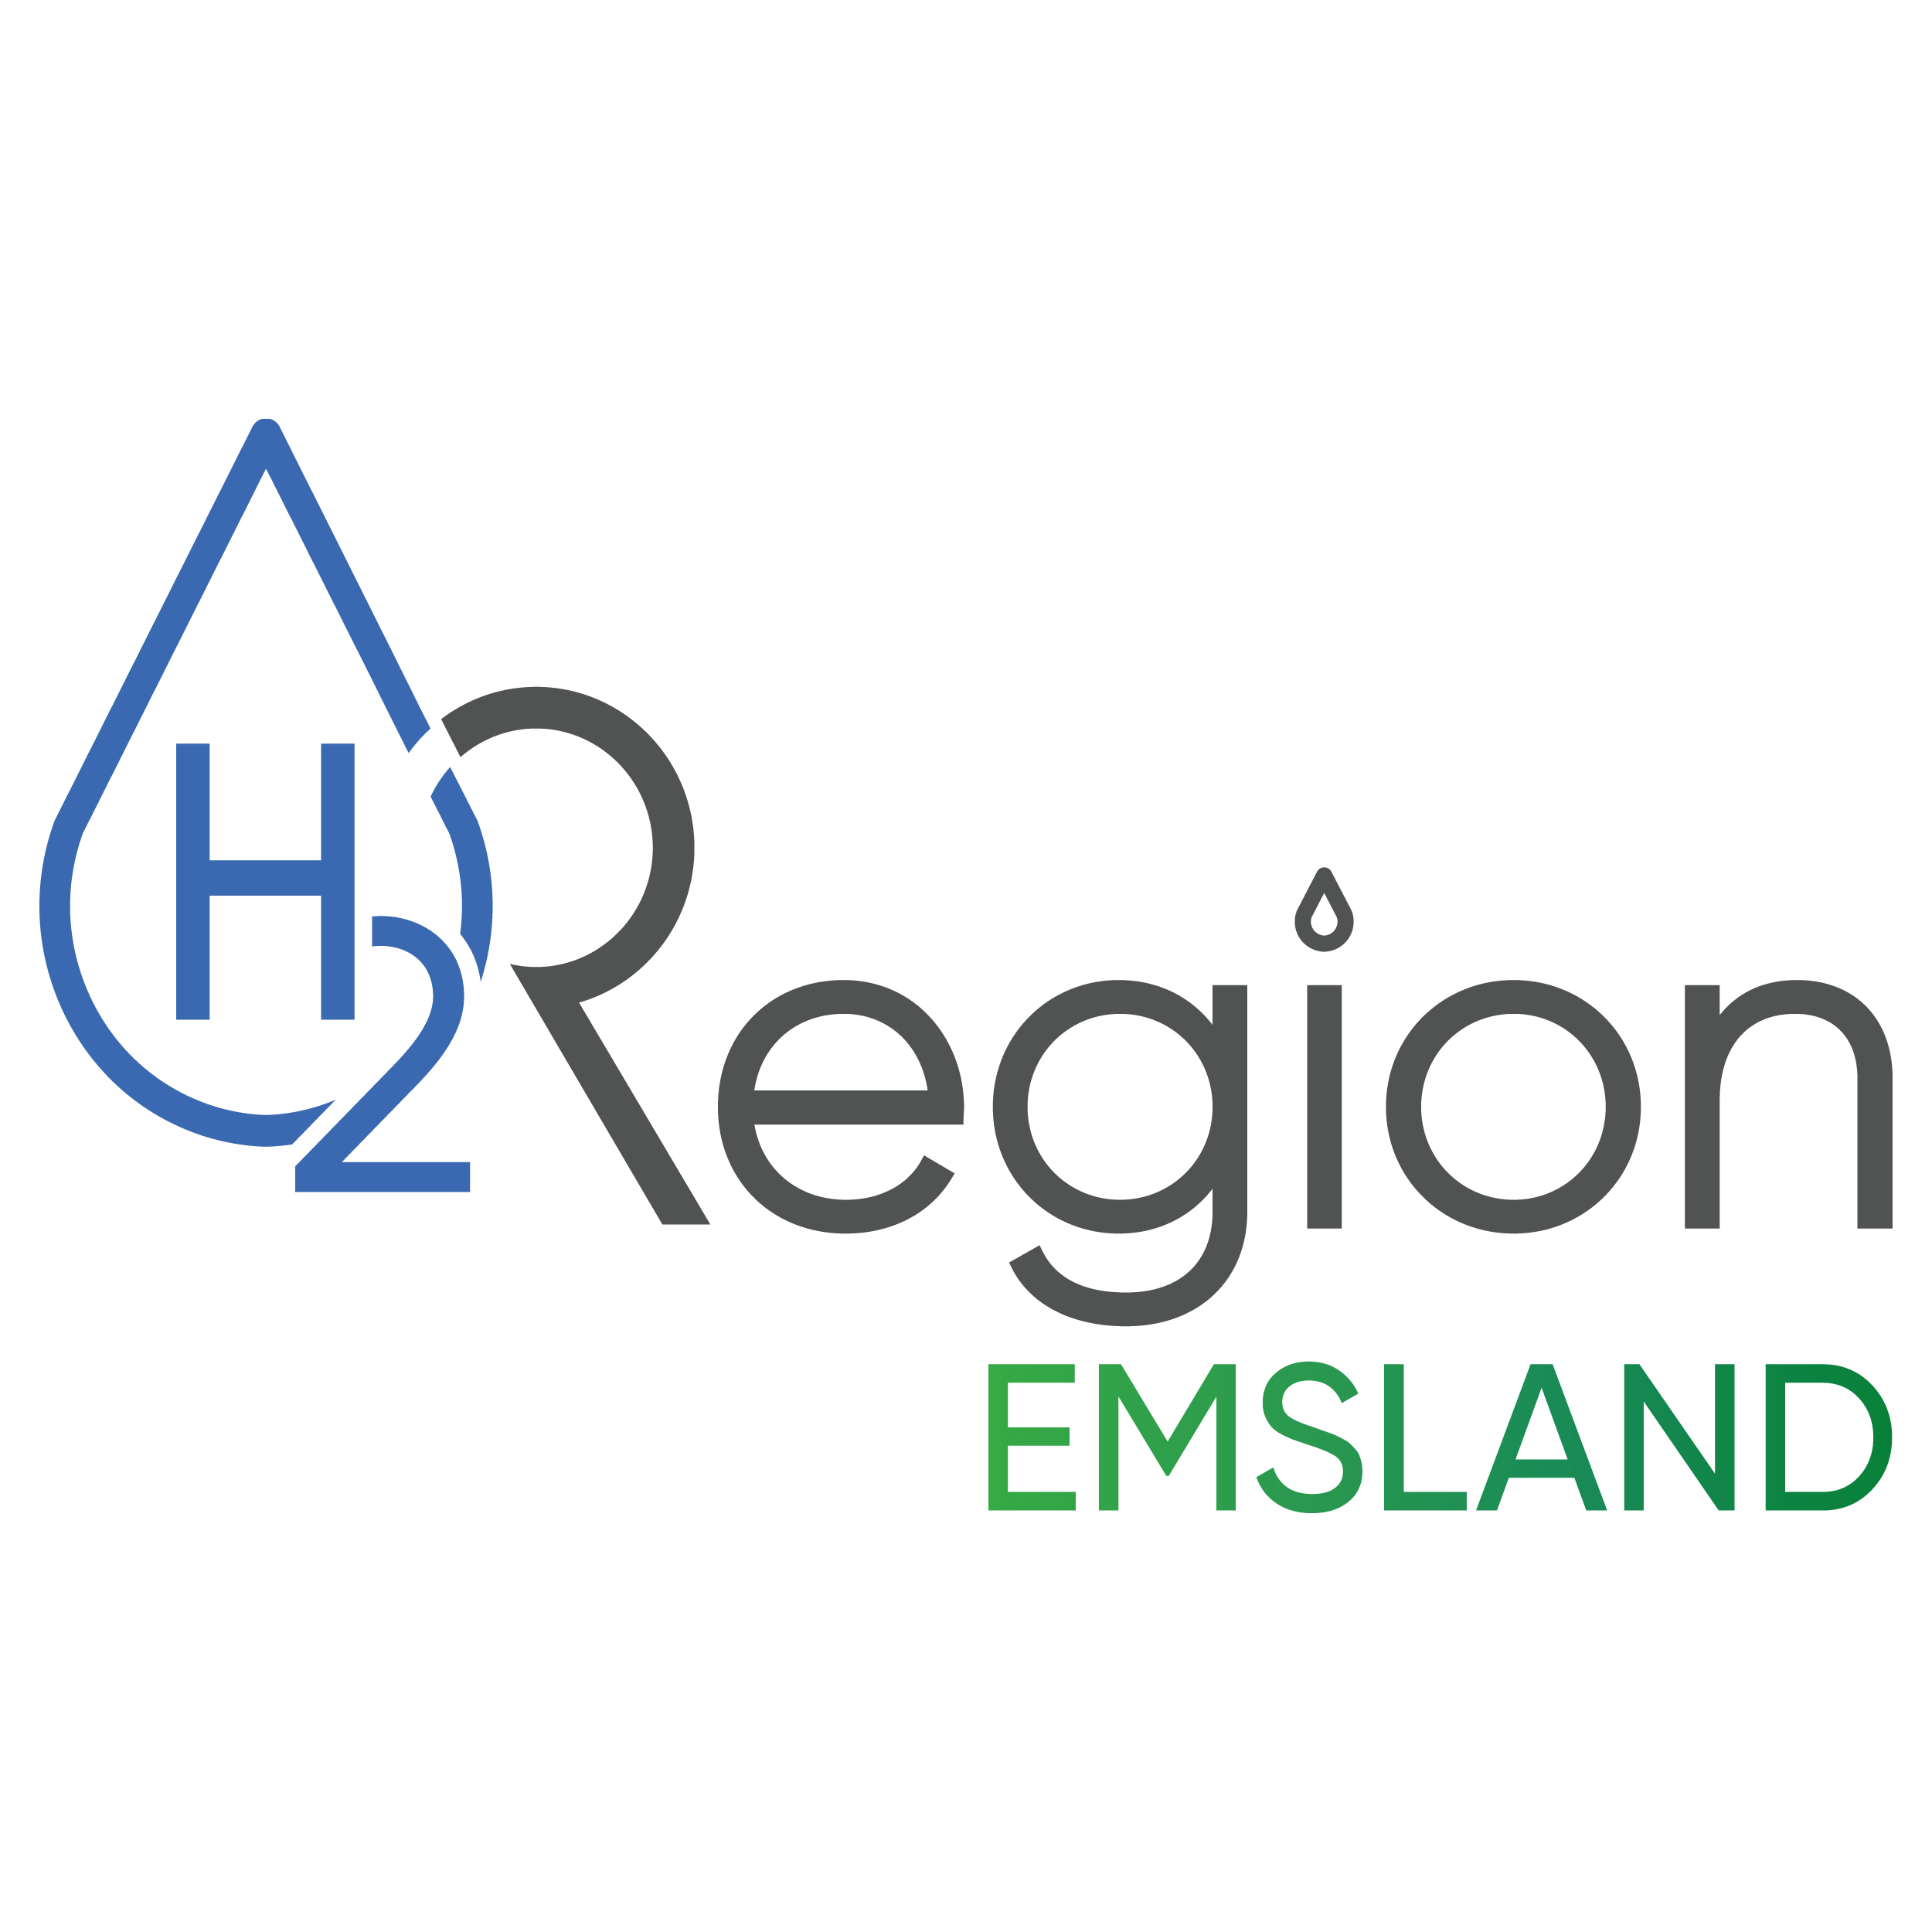 (c) H2-region-emsland.de